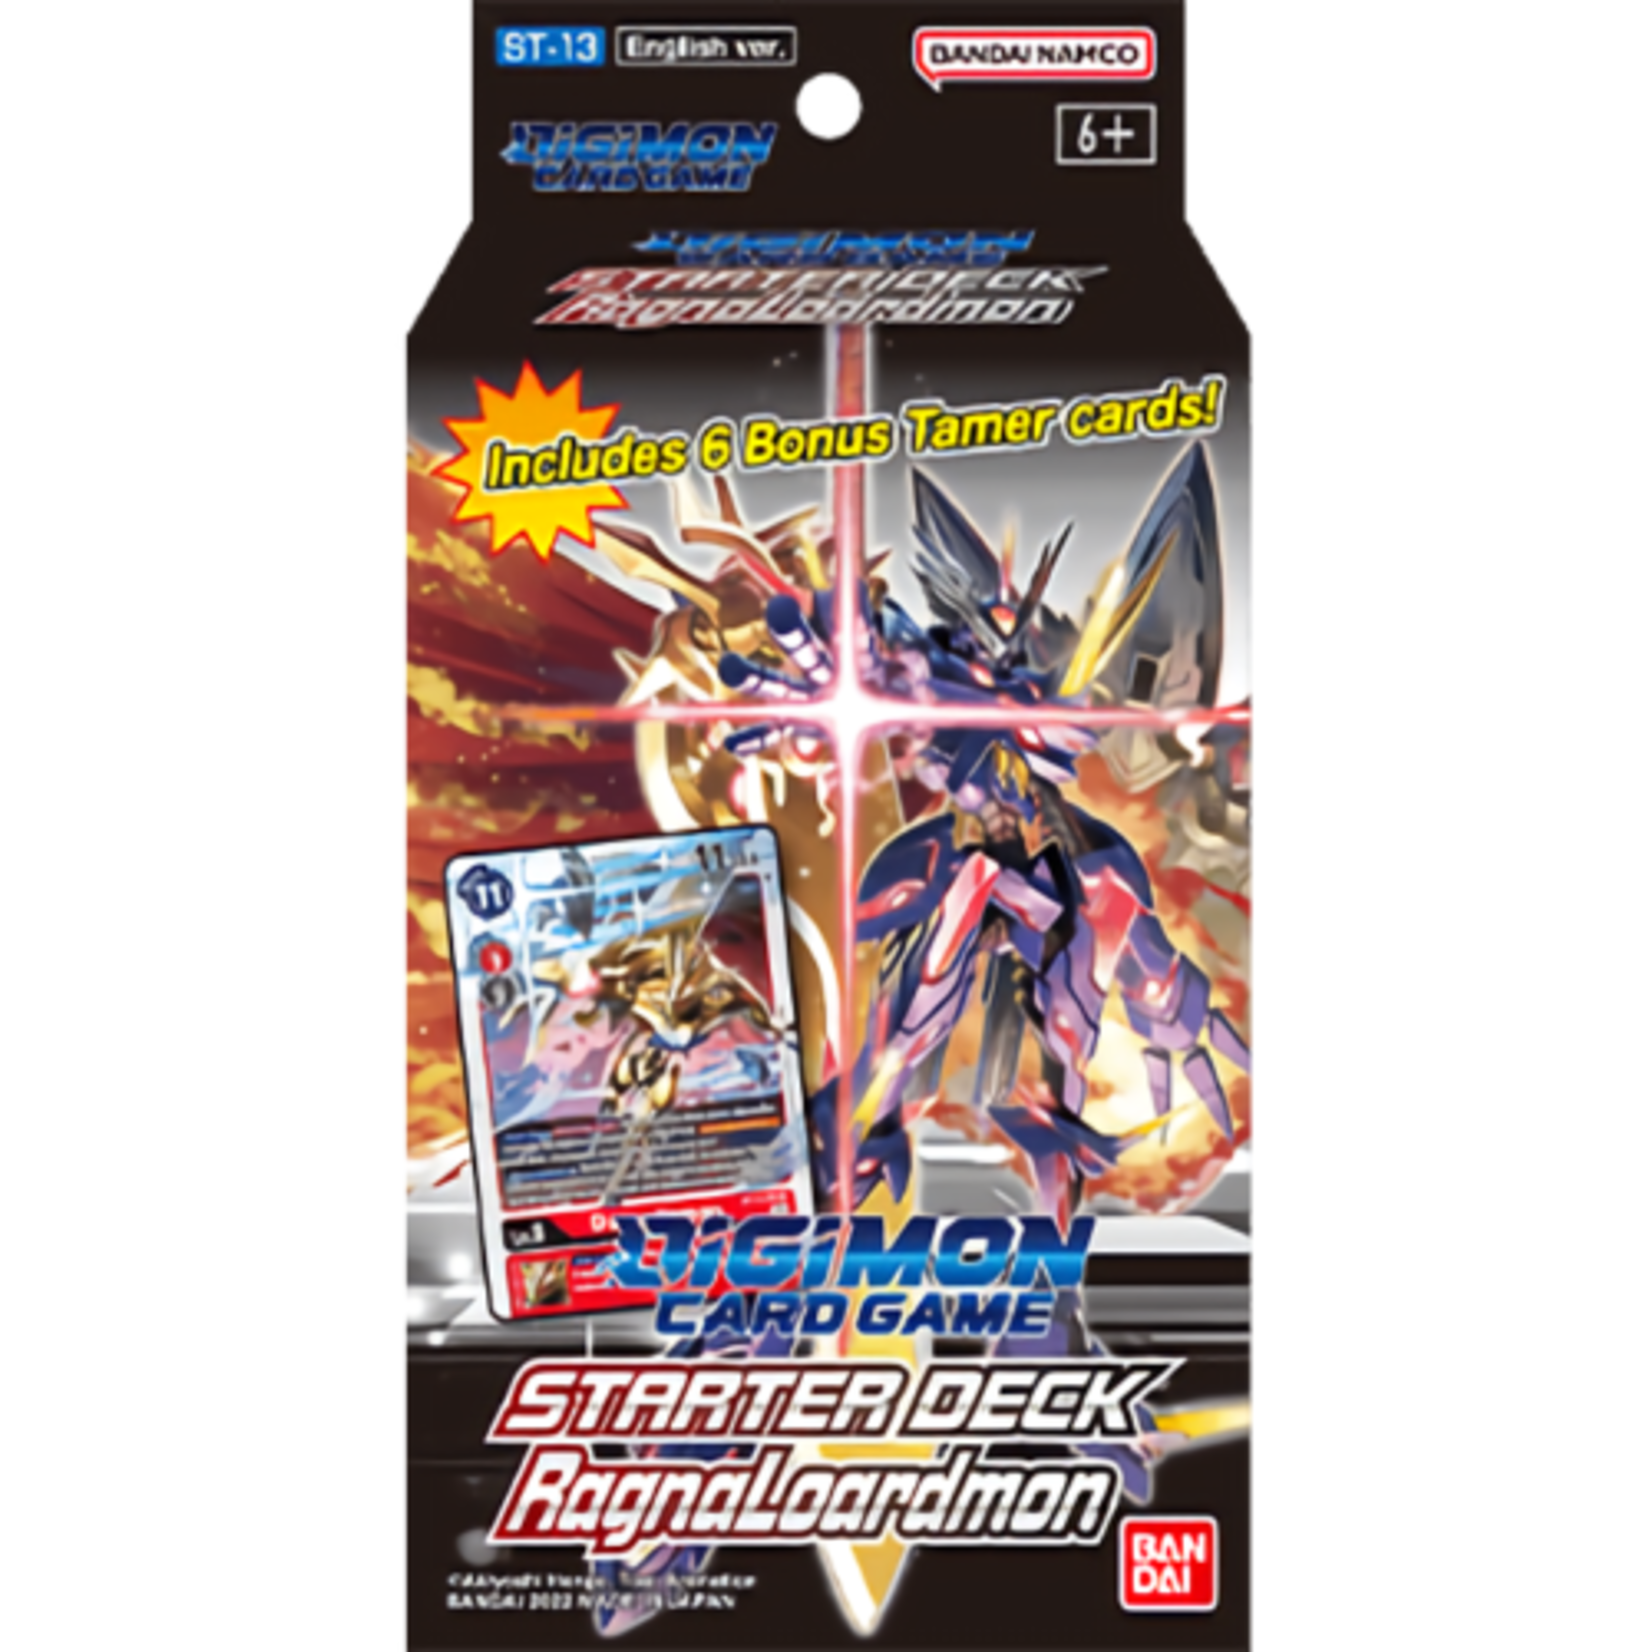 Digimon TCG: RagnaLoardmon Starter Deck (ST13) single